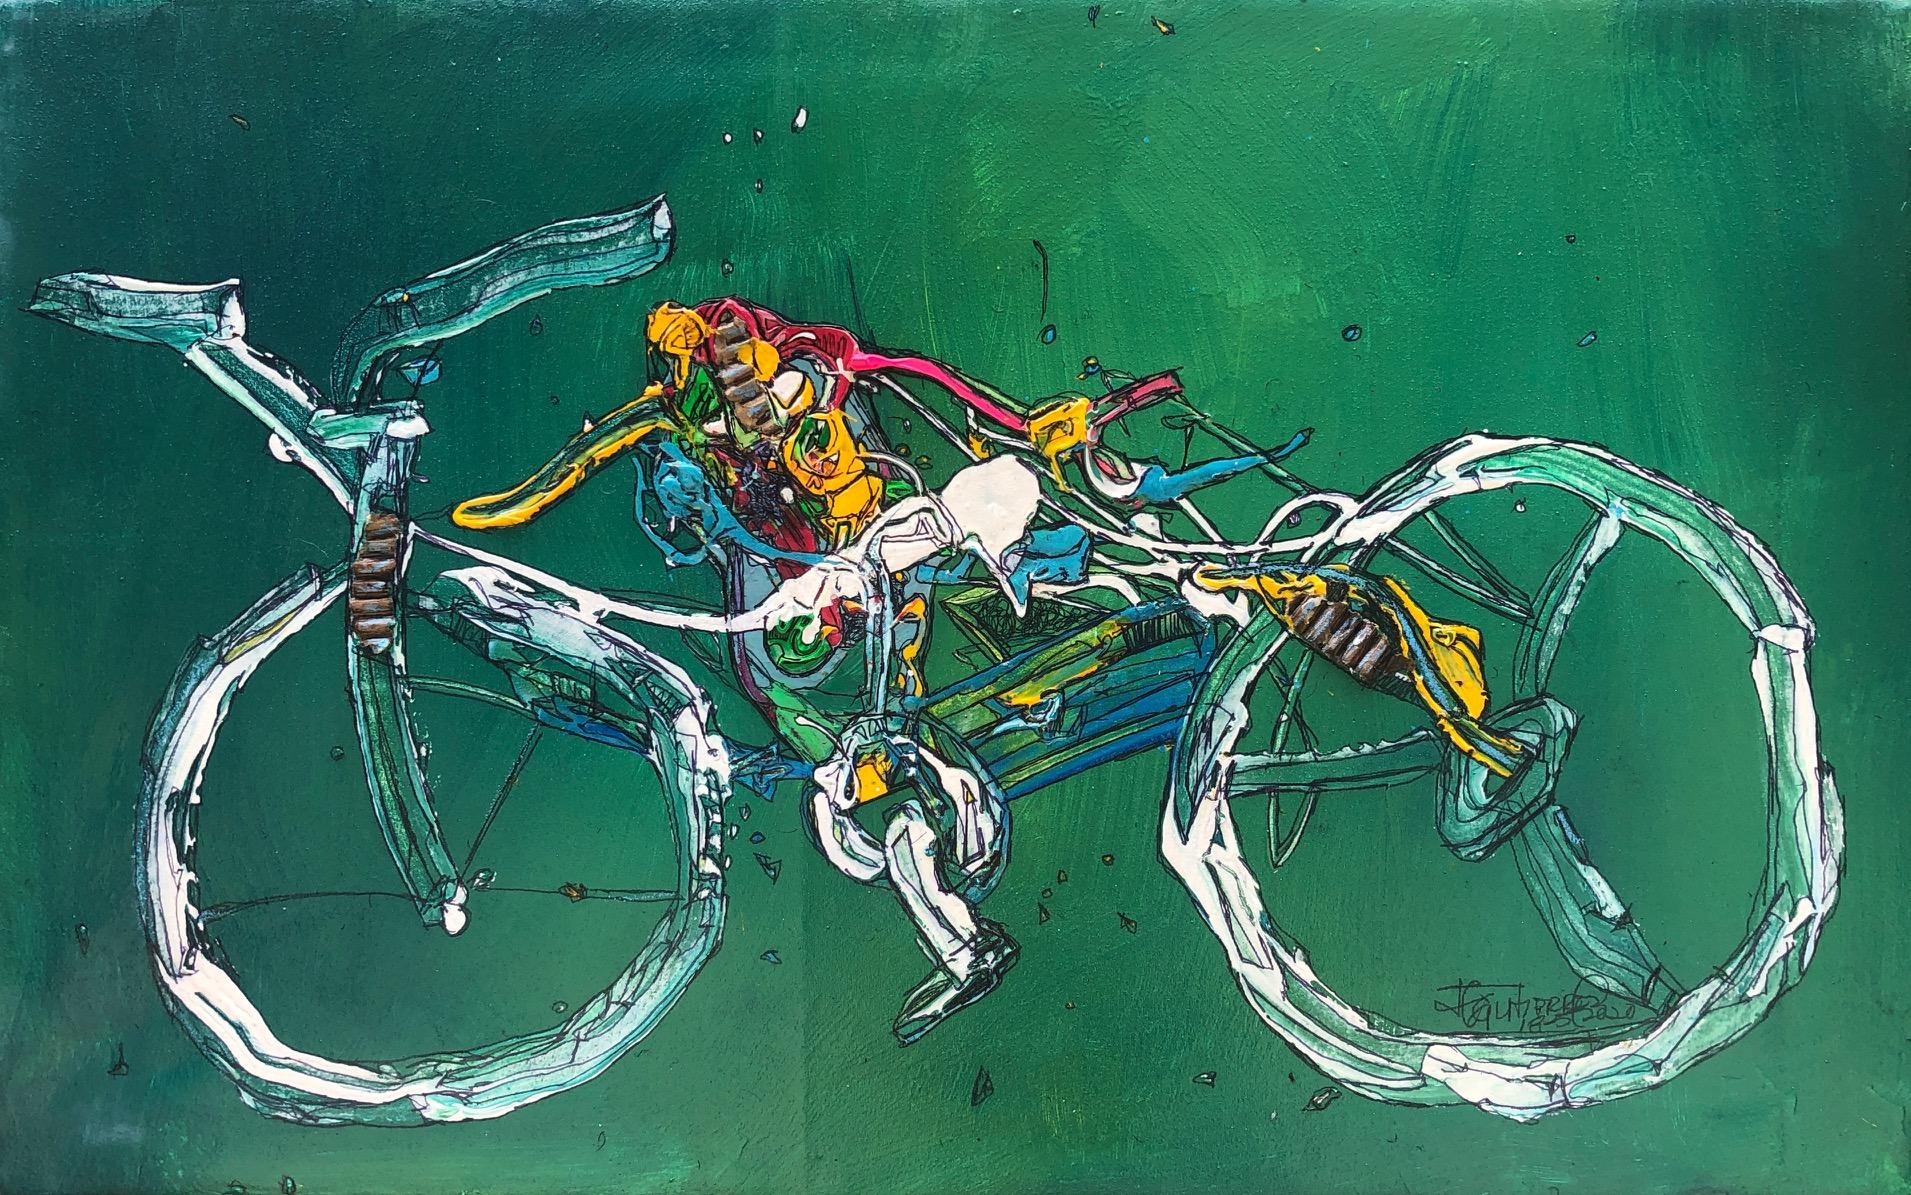 Juan Lazaro  Abstract Painting - Bike Transformer: Abstract Contemporary Acrylic Painting